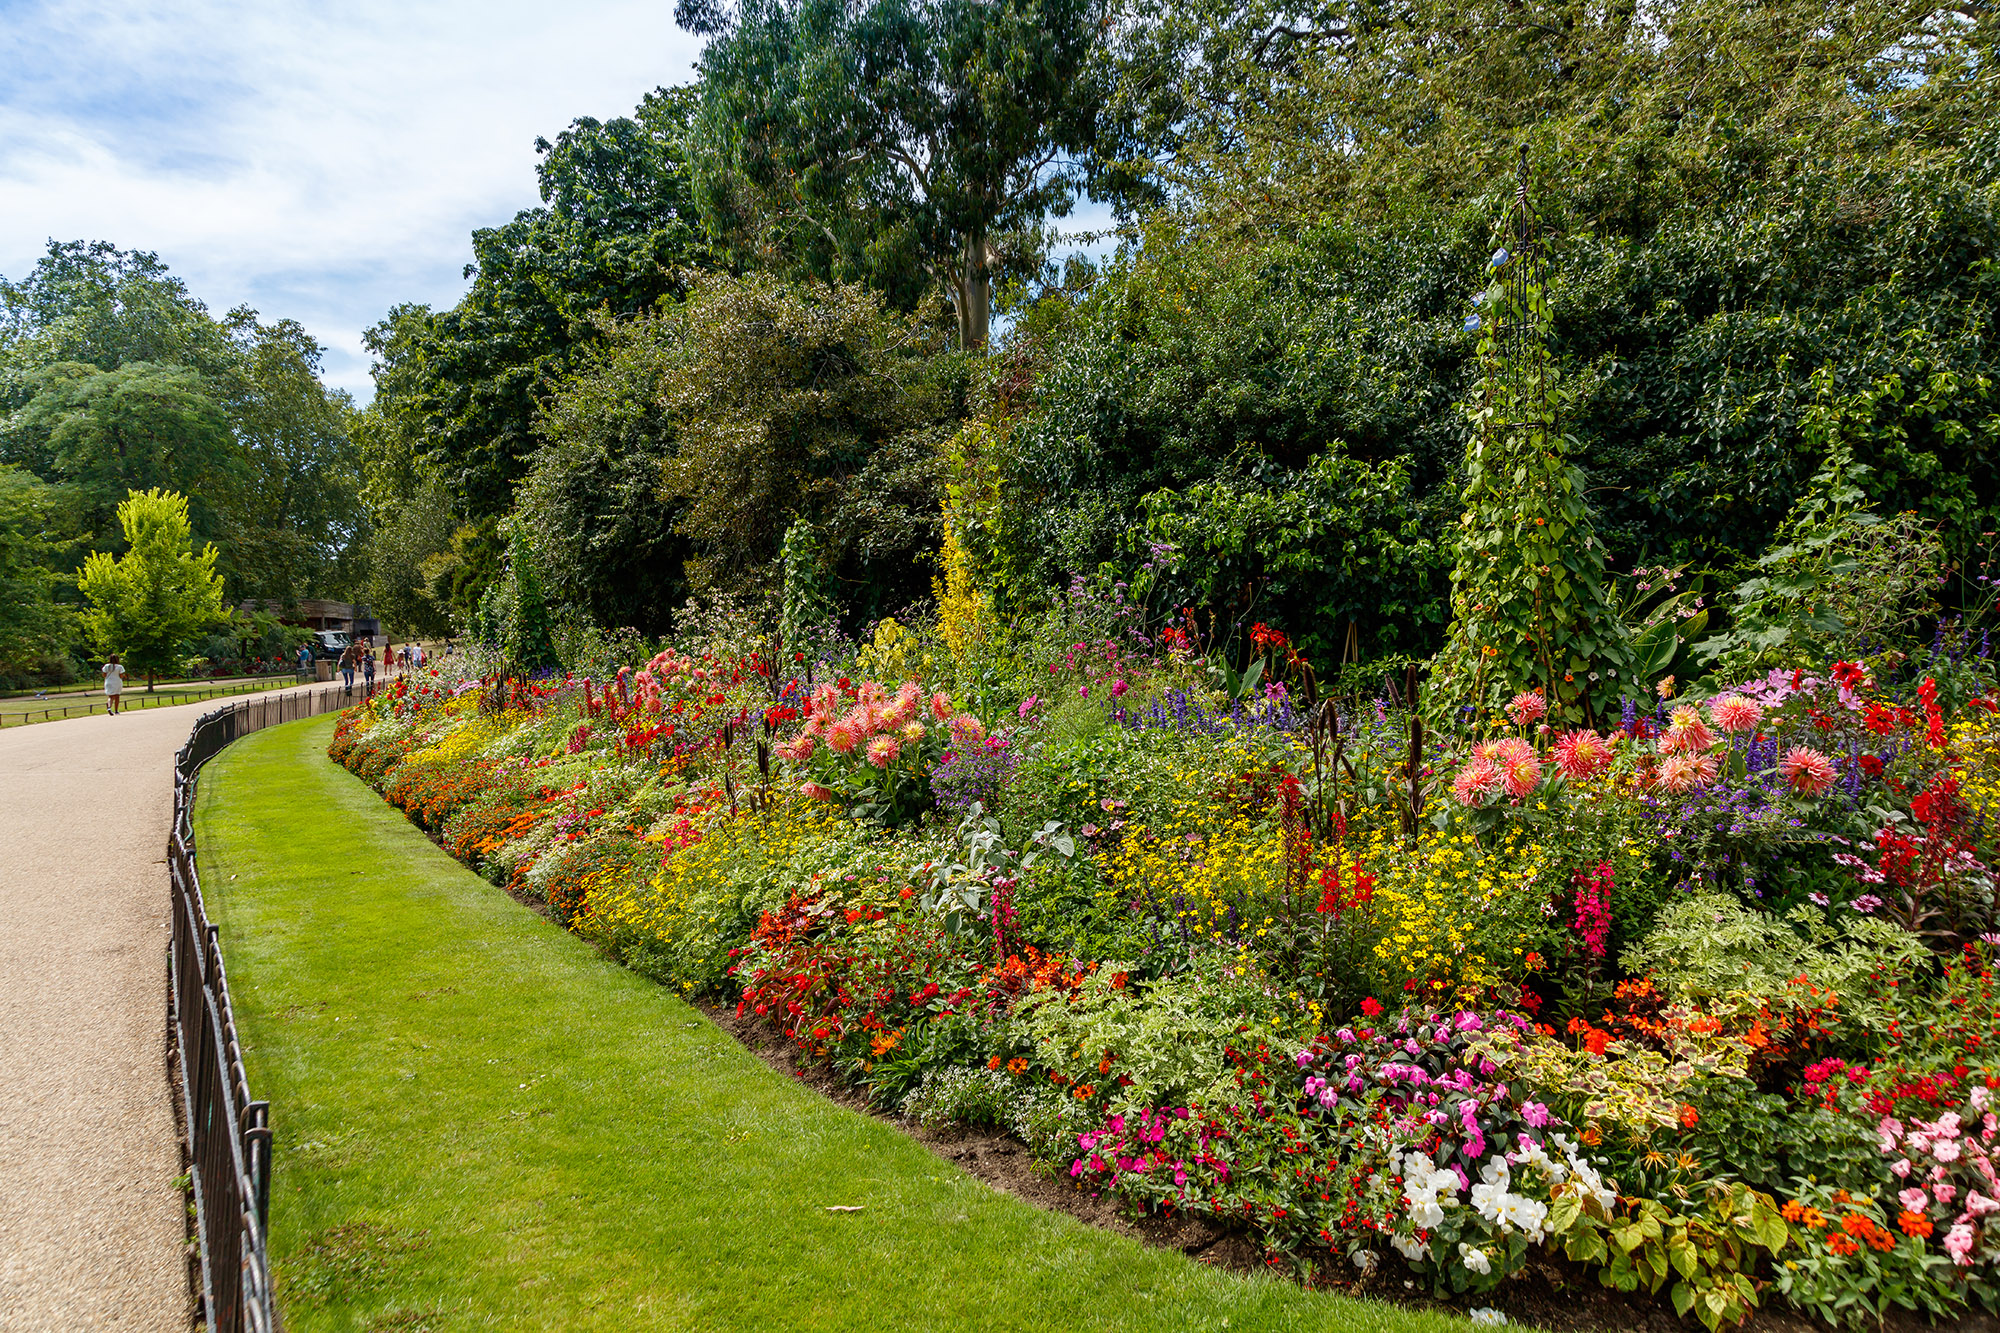 Summer flower beds in St. James's Park